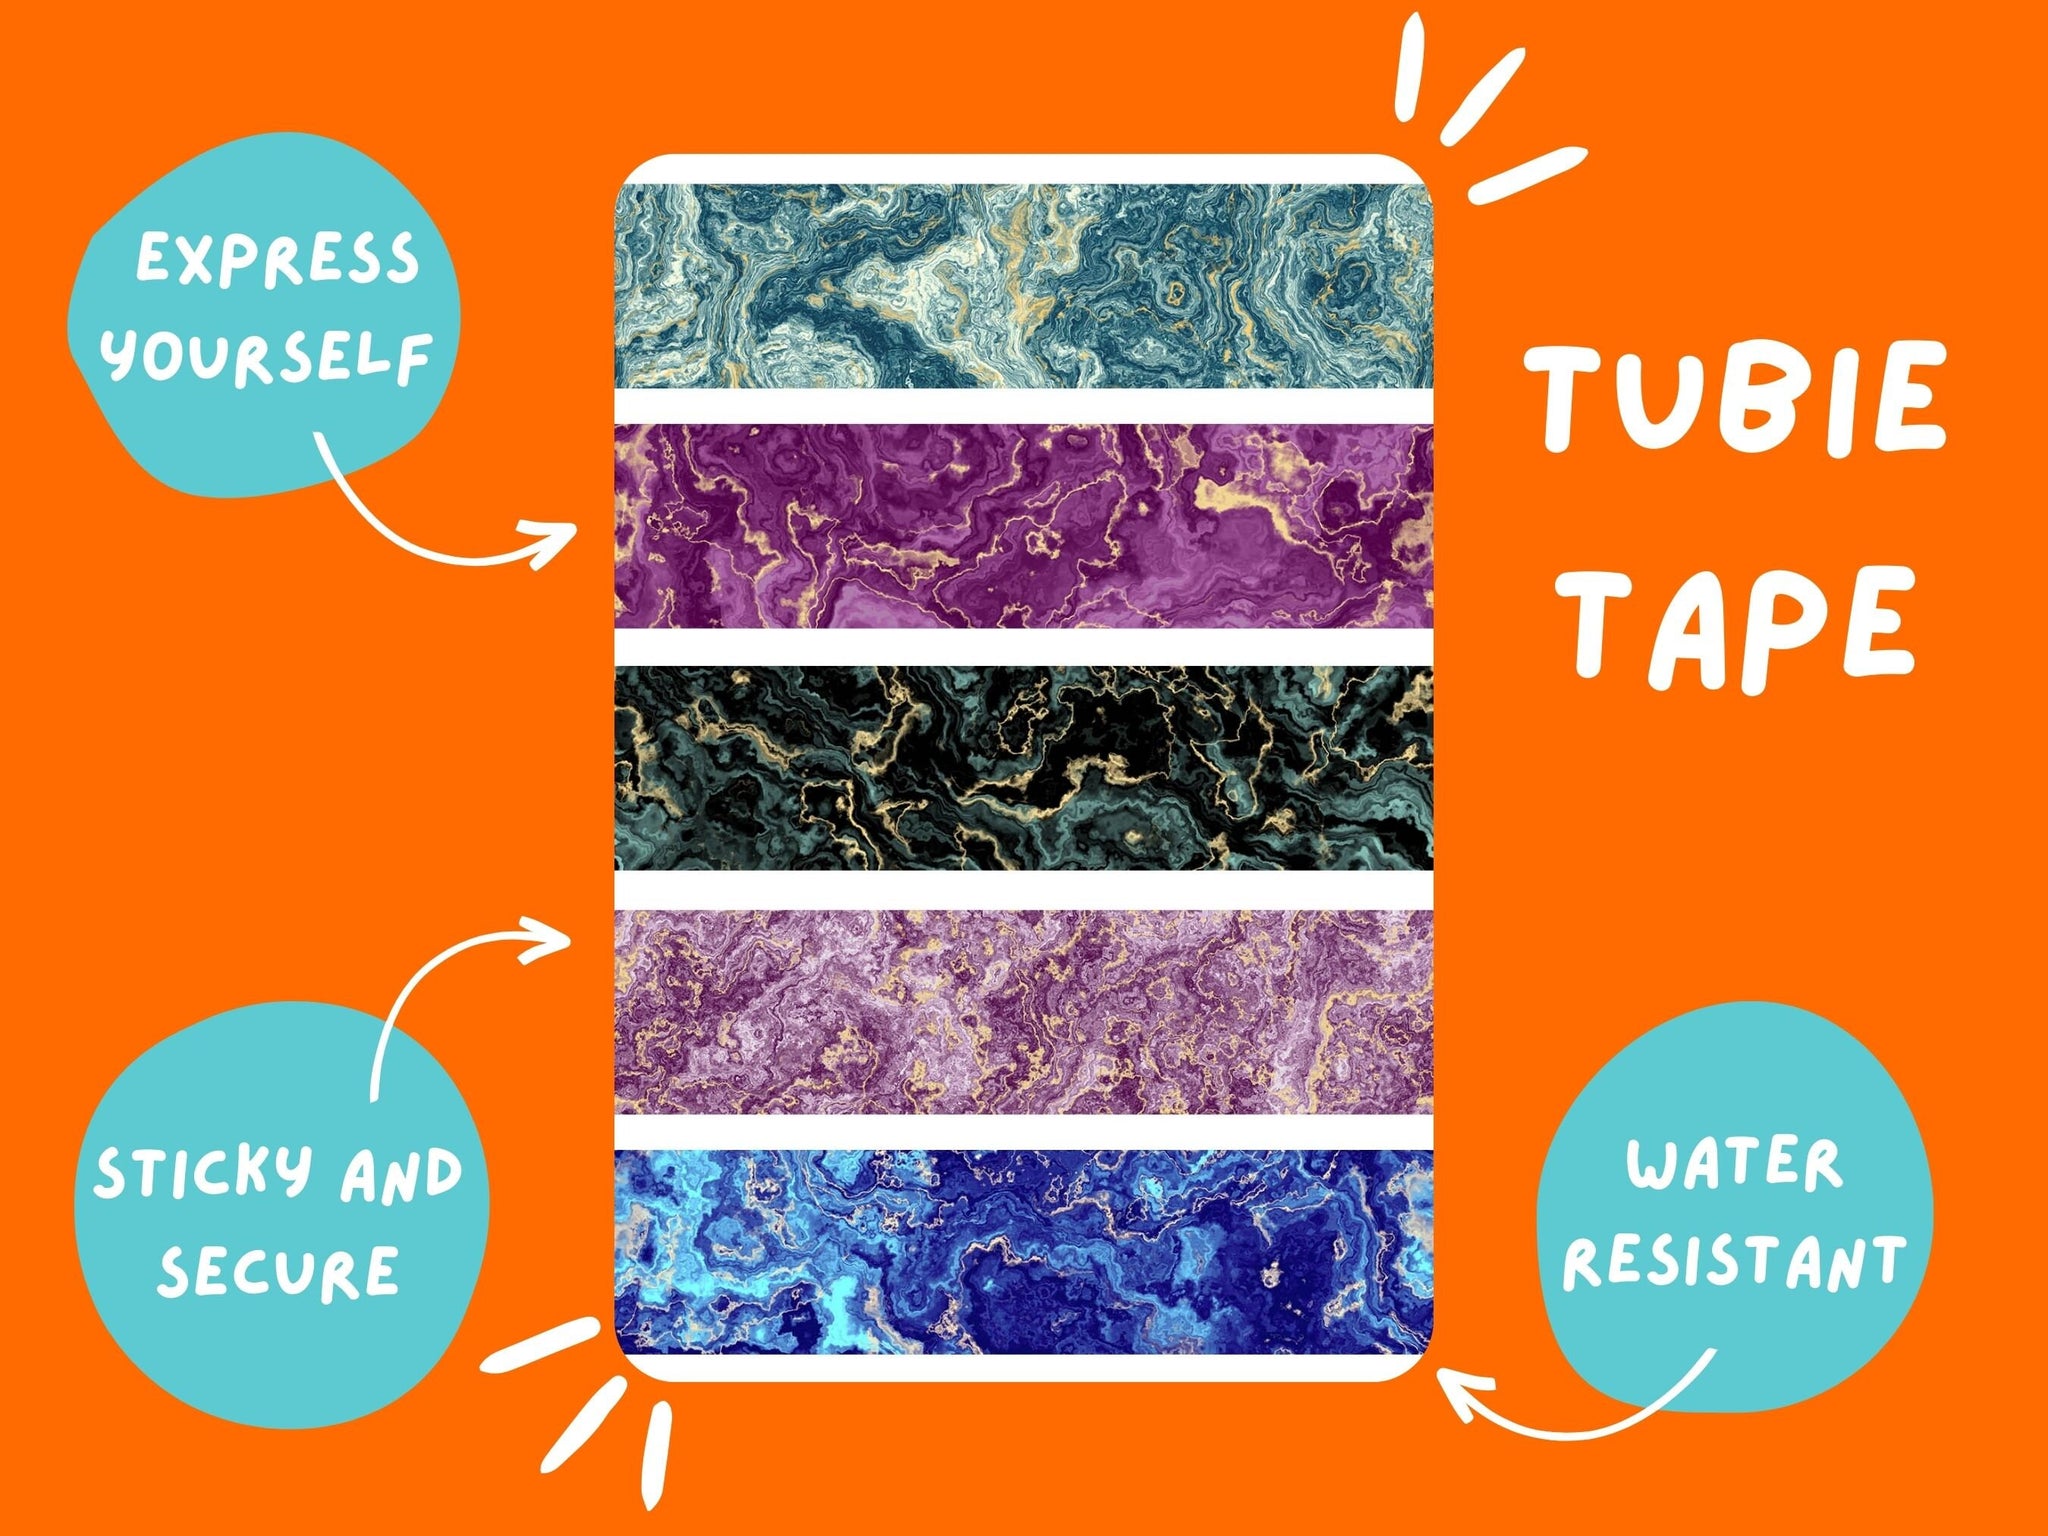 TUBIE TAPE marble Tubie Life ng tube tape